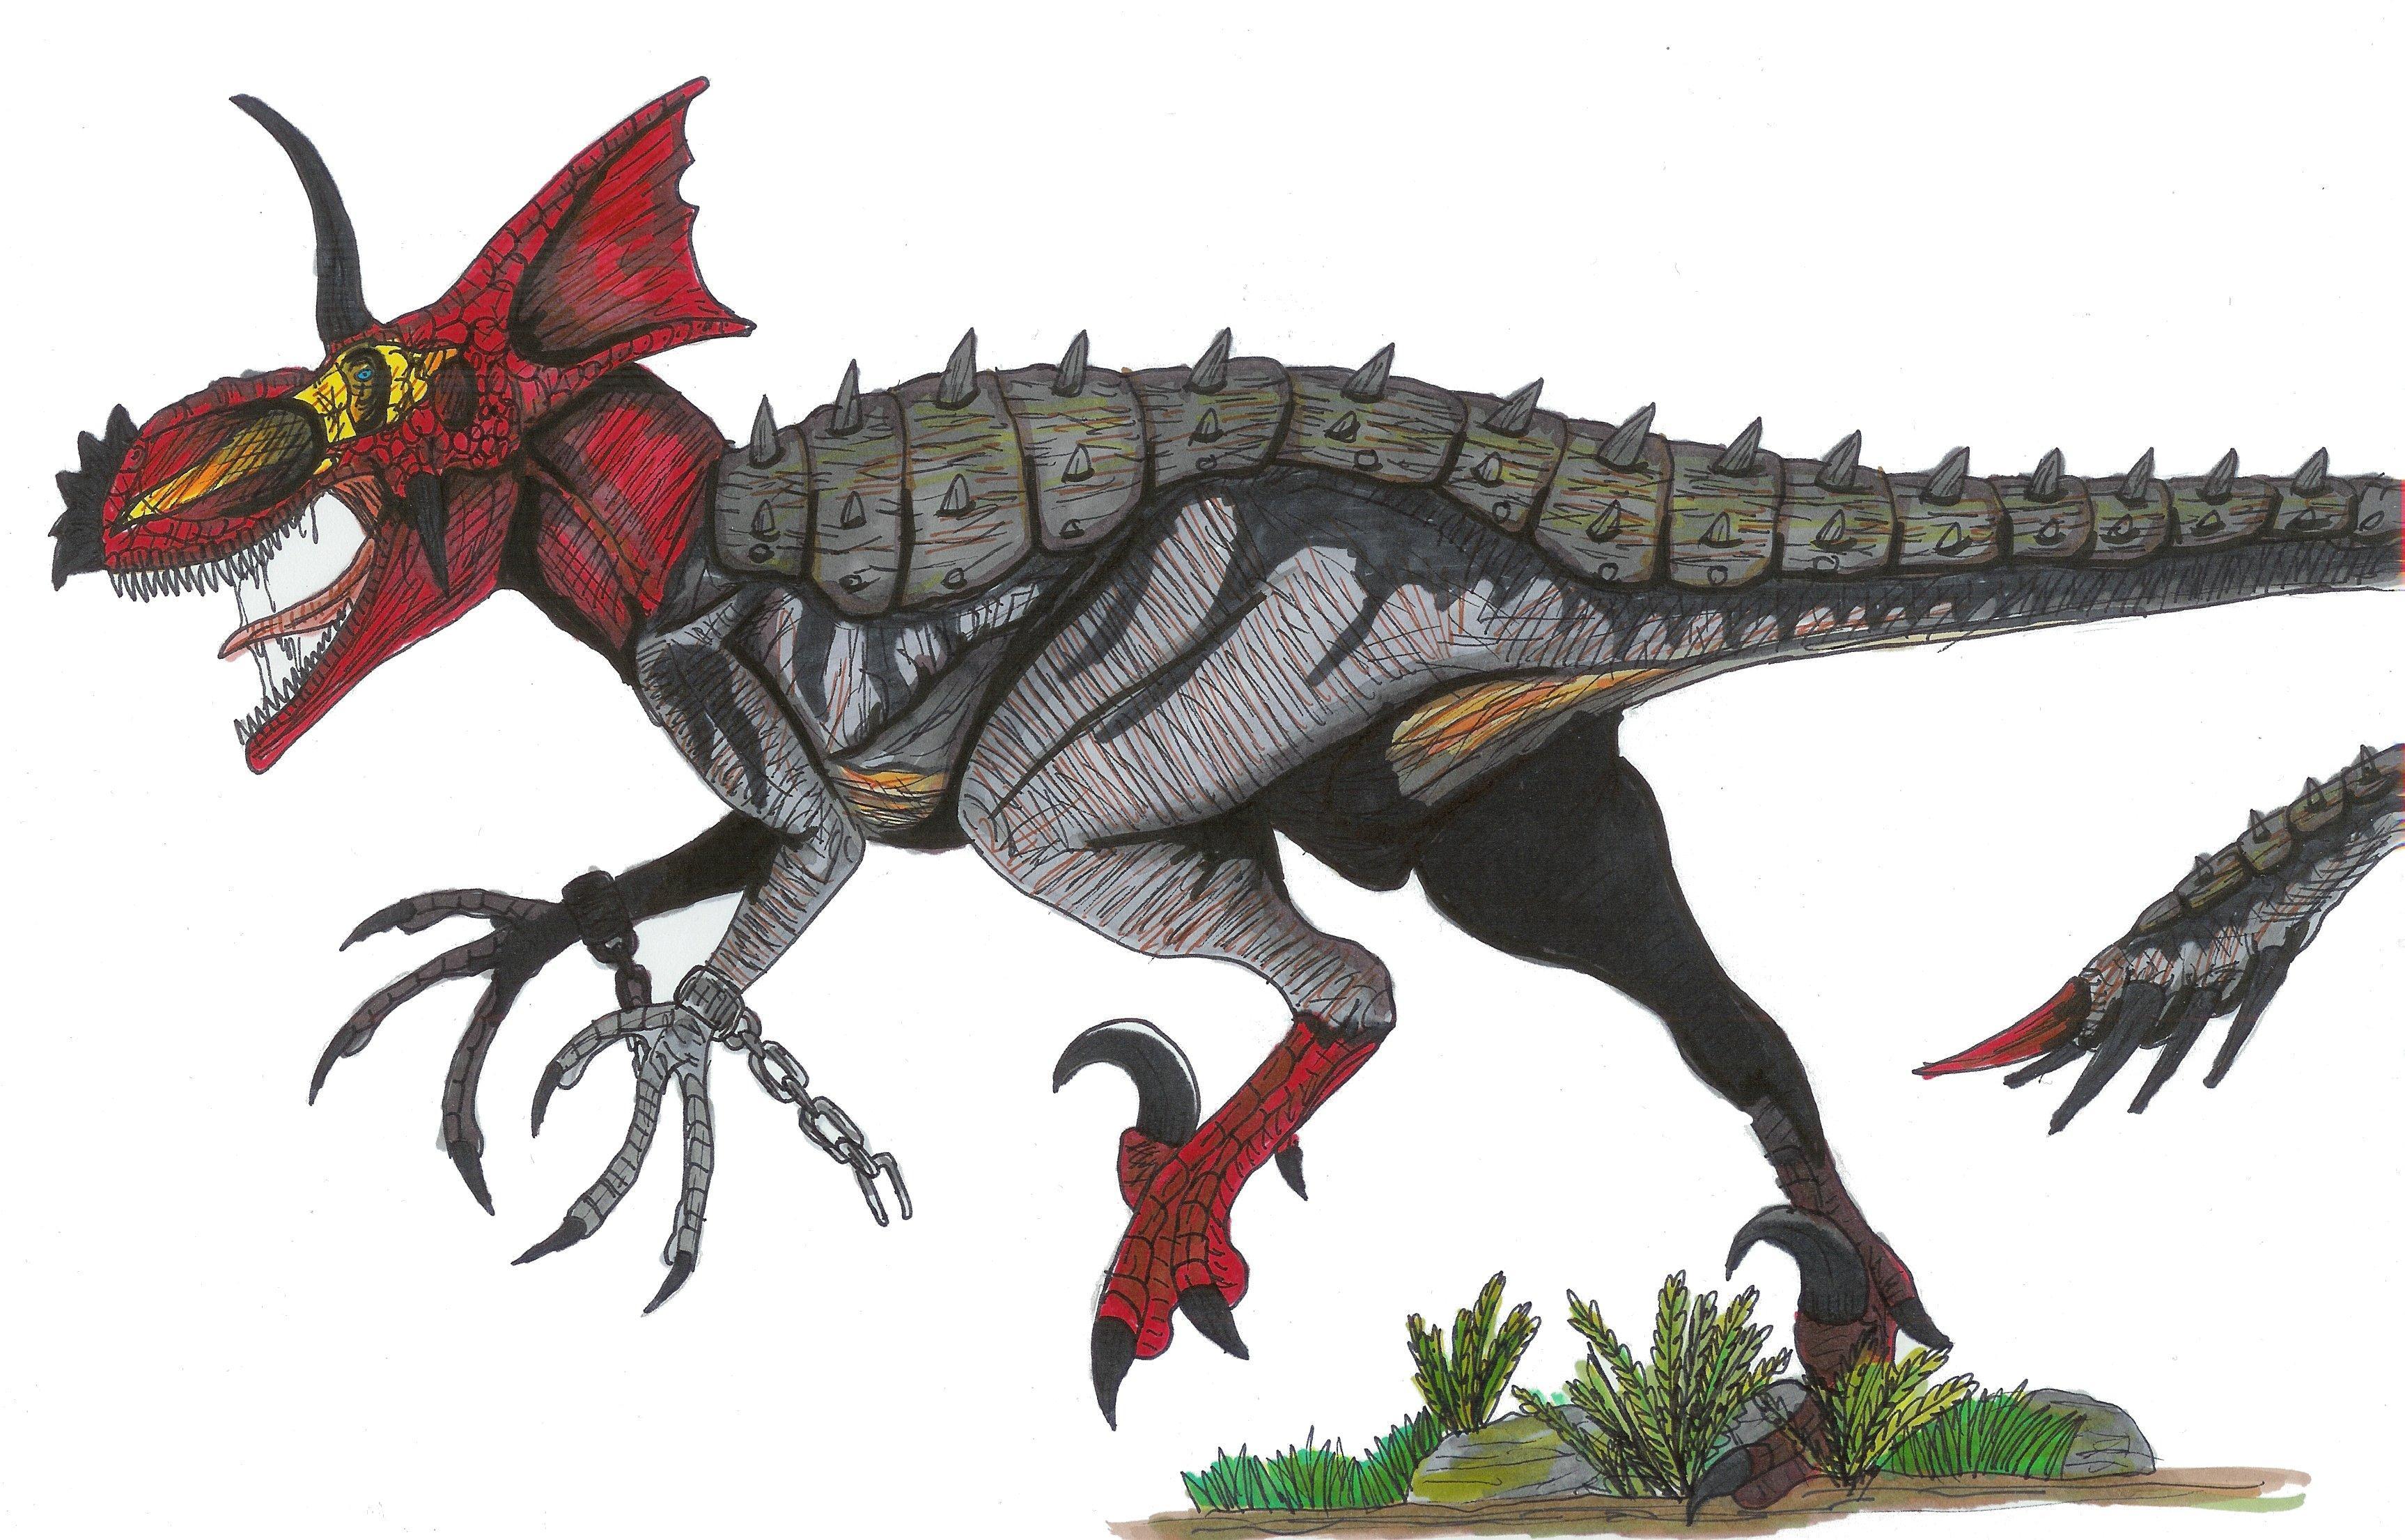 The Ultimasaurus: a cross between Tyrannosaurus rex, Triceratops, Velociraptor, Ankylosaurus, and Stegosaurus.